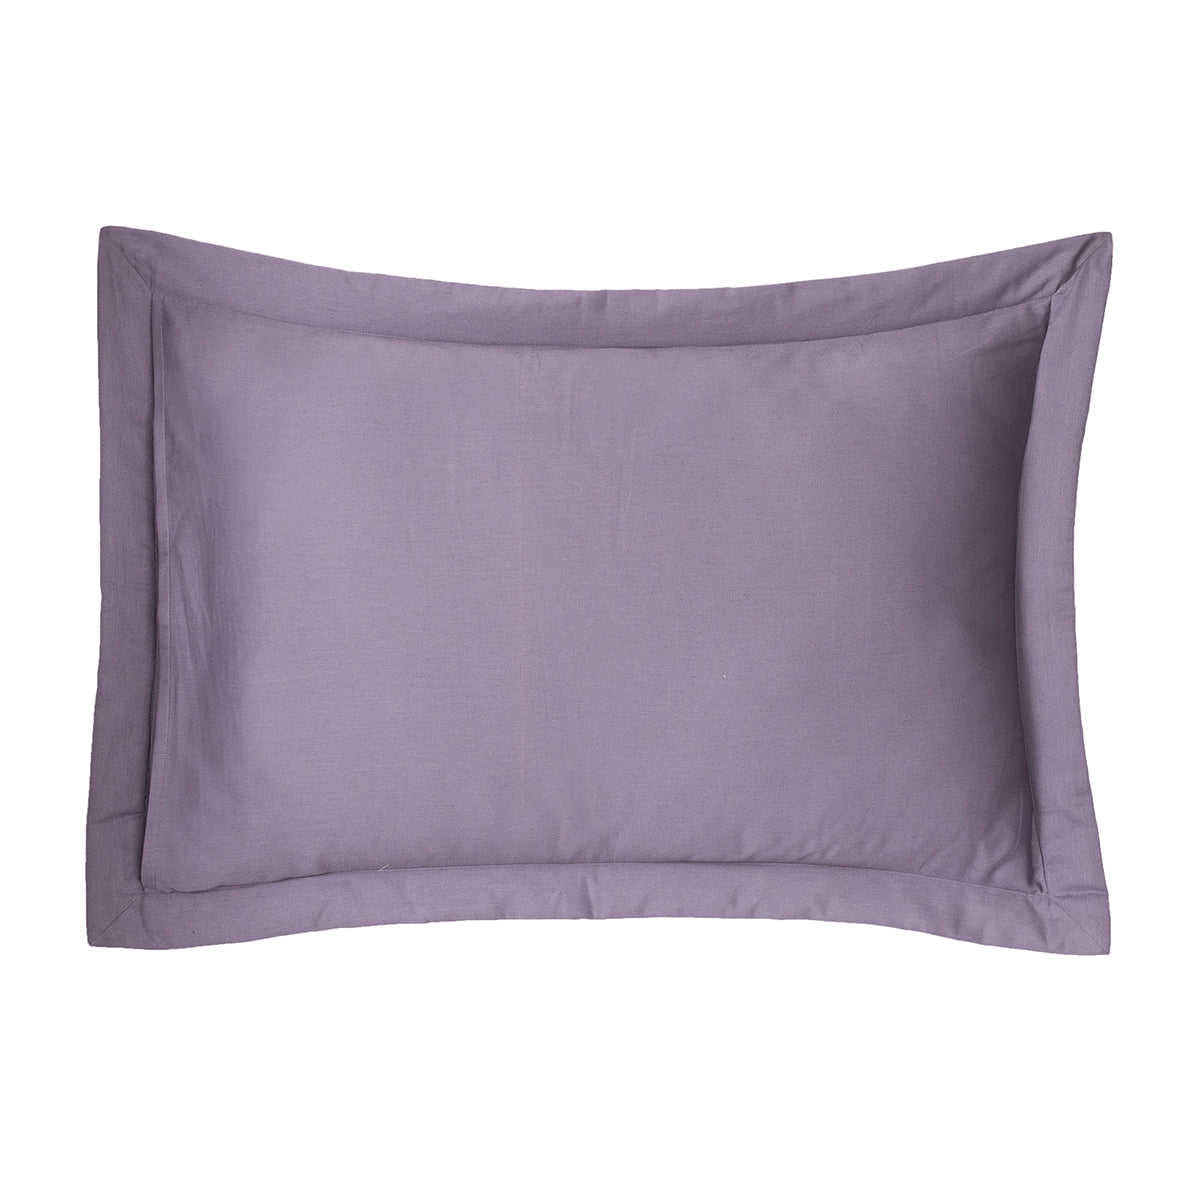 Nouveau Tradition Form Replay Blue Pillow Sham Set